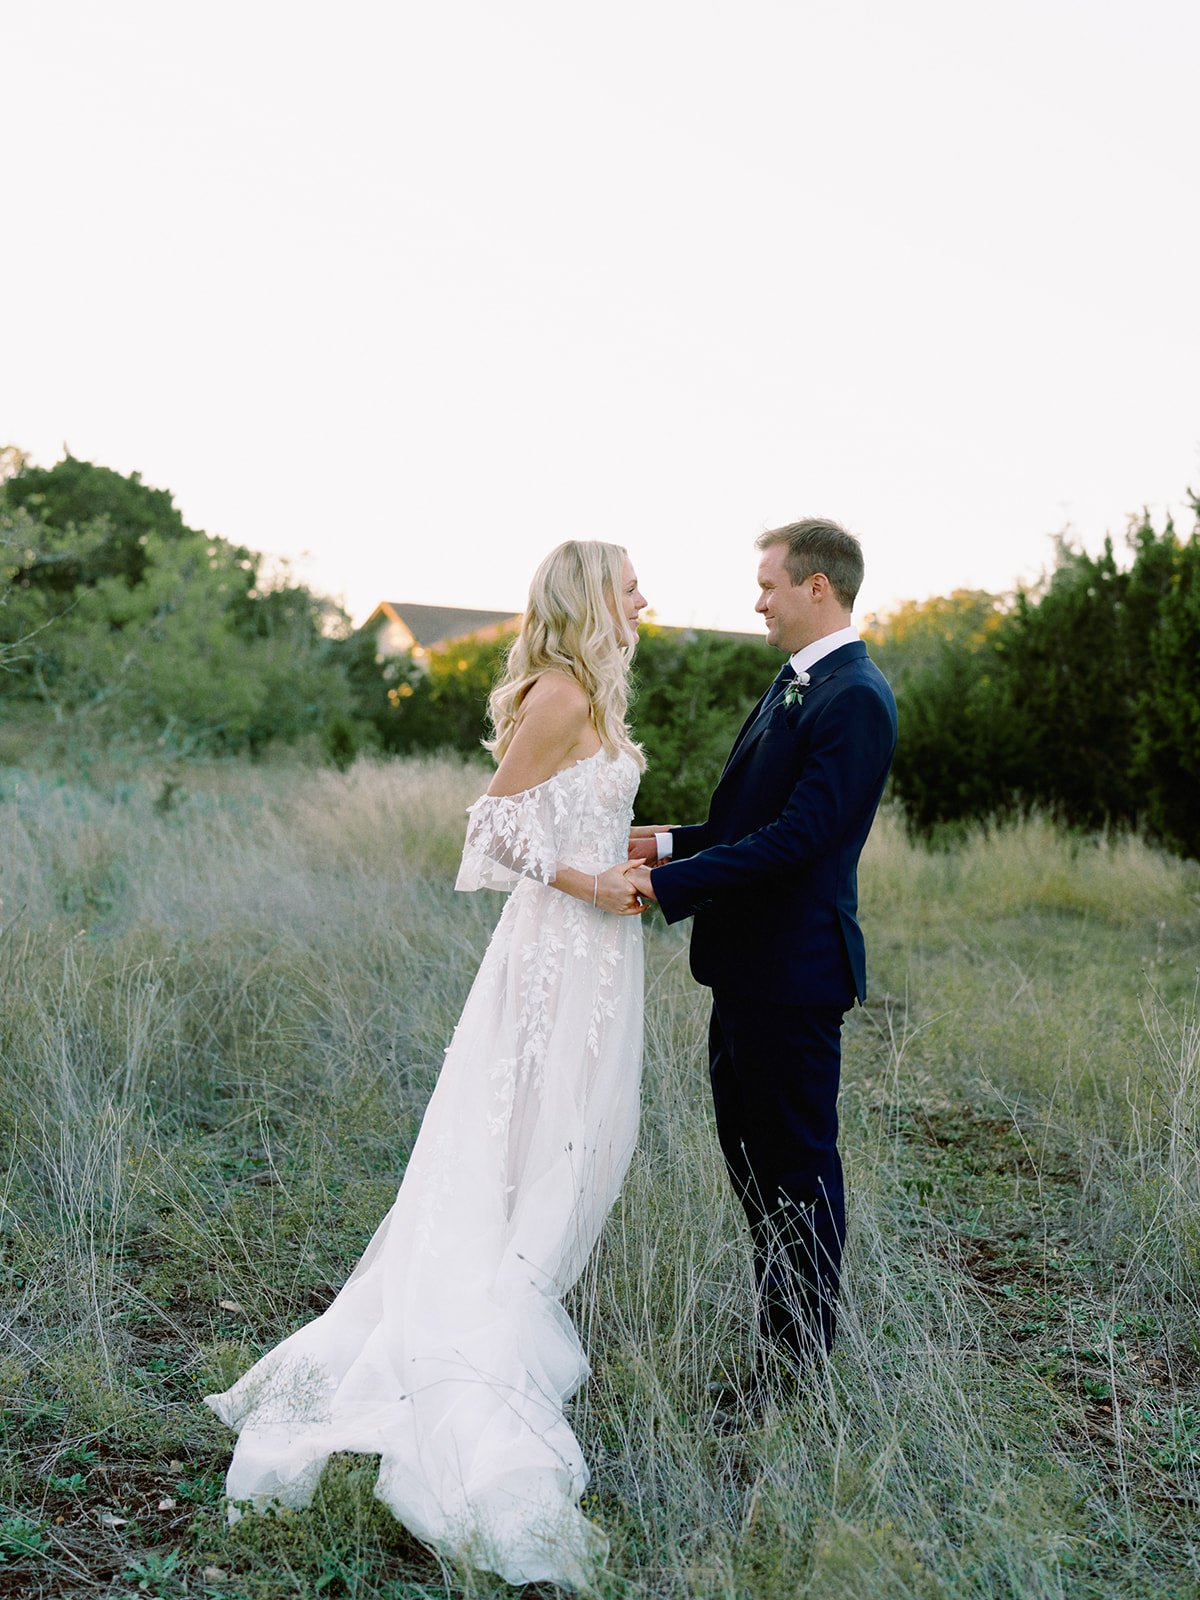 Best-Austin-Wedding-Photographers-Elopement-Film-35mm-Asheville-Santa-Barbara-Backyard-111.jpg